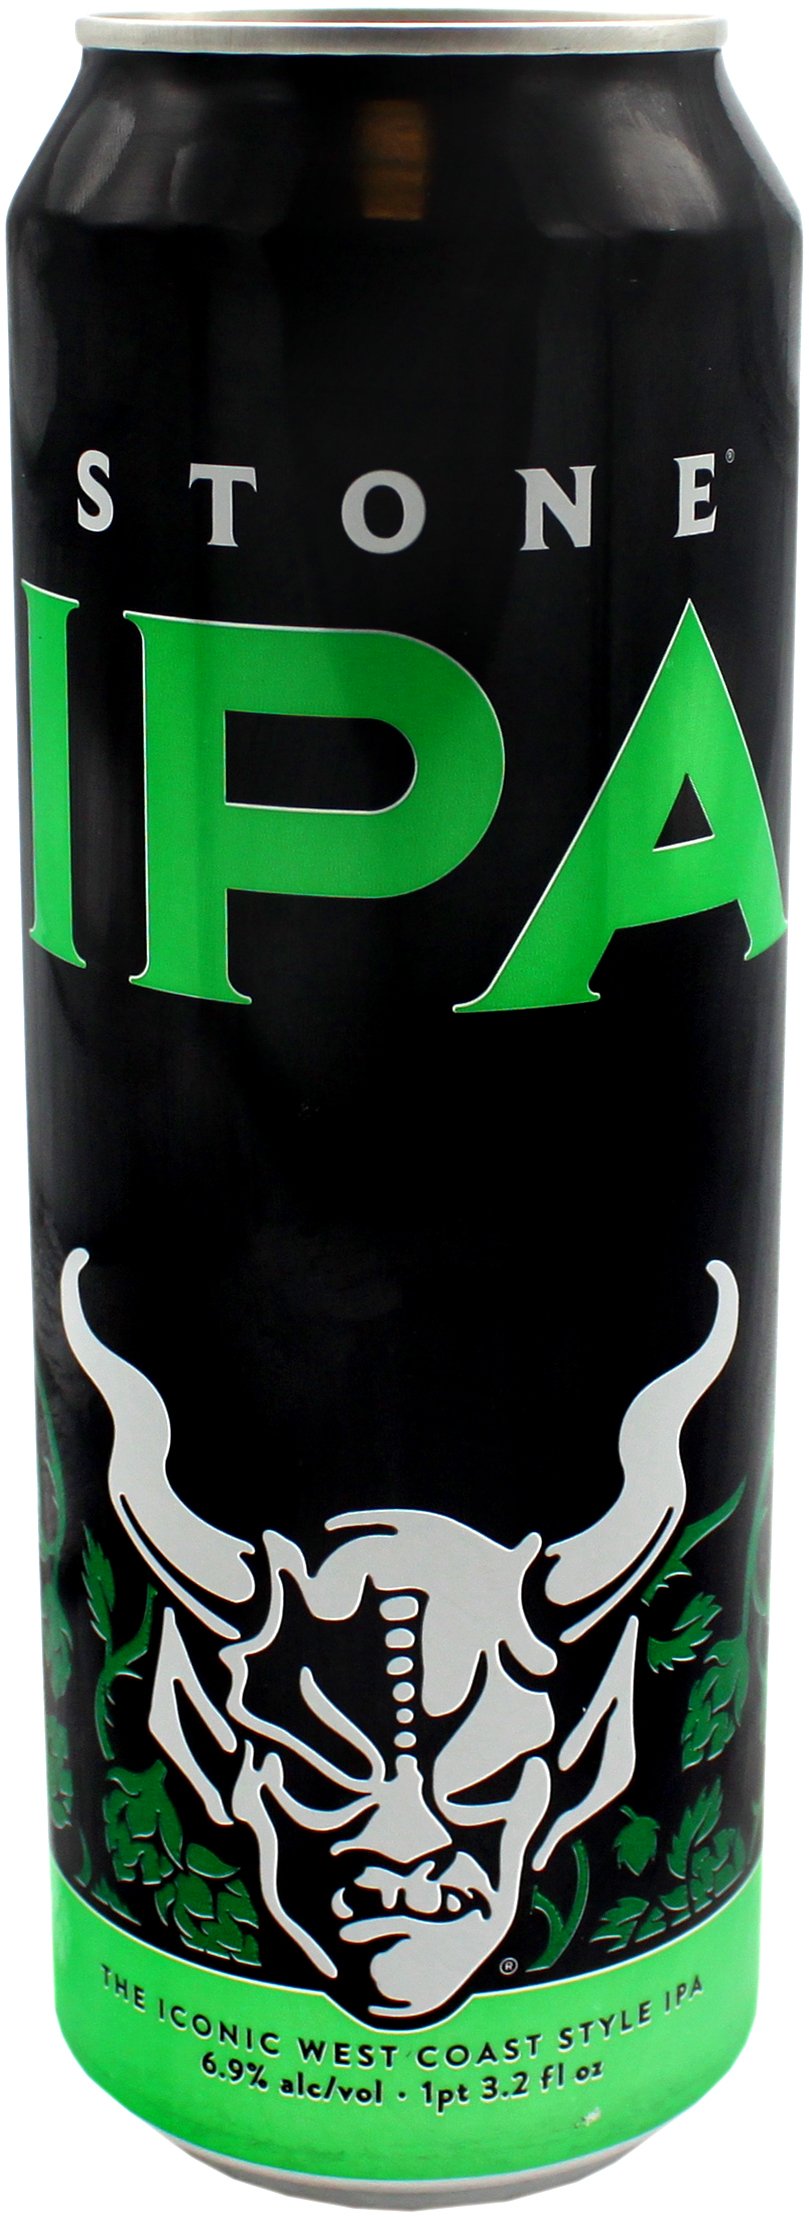 Stone Beer, IPA - 19.2 (1 pt 3.2 fl oz)